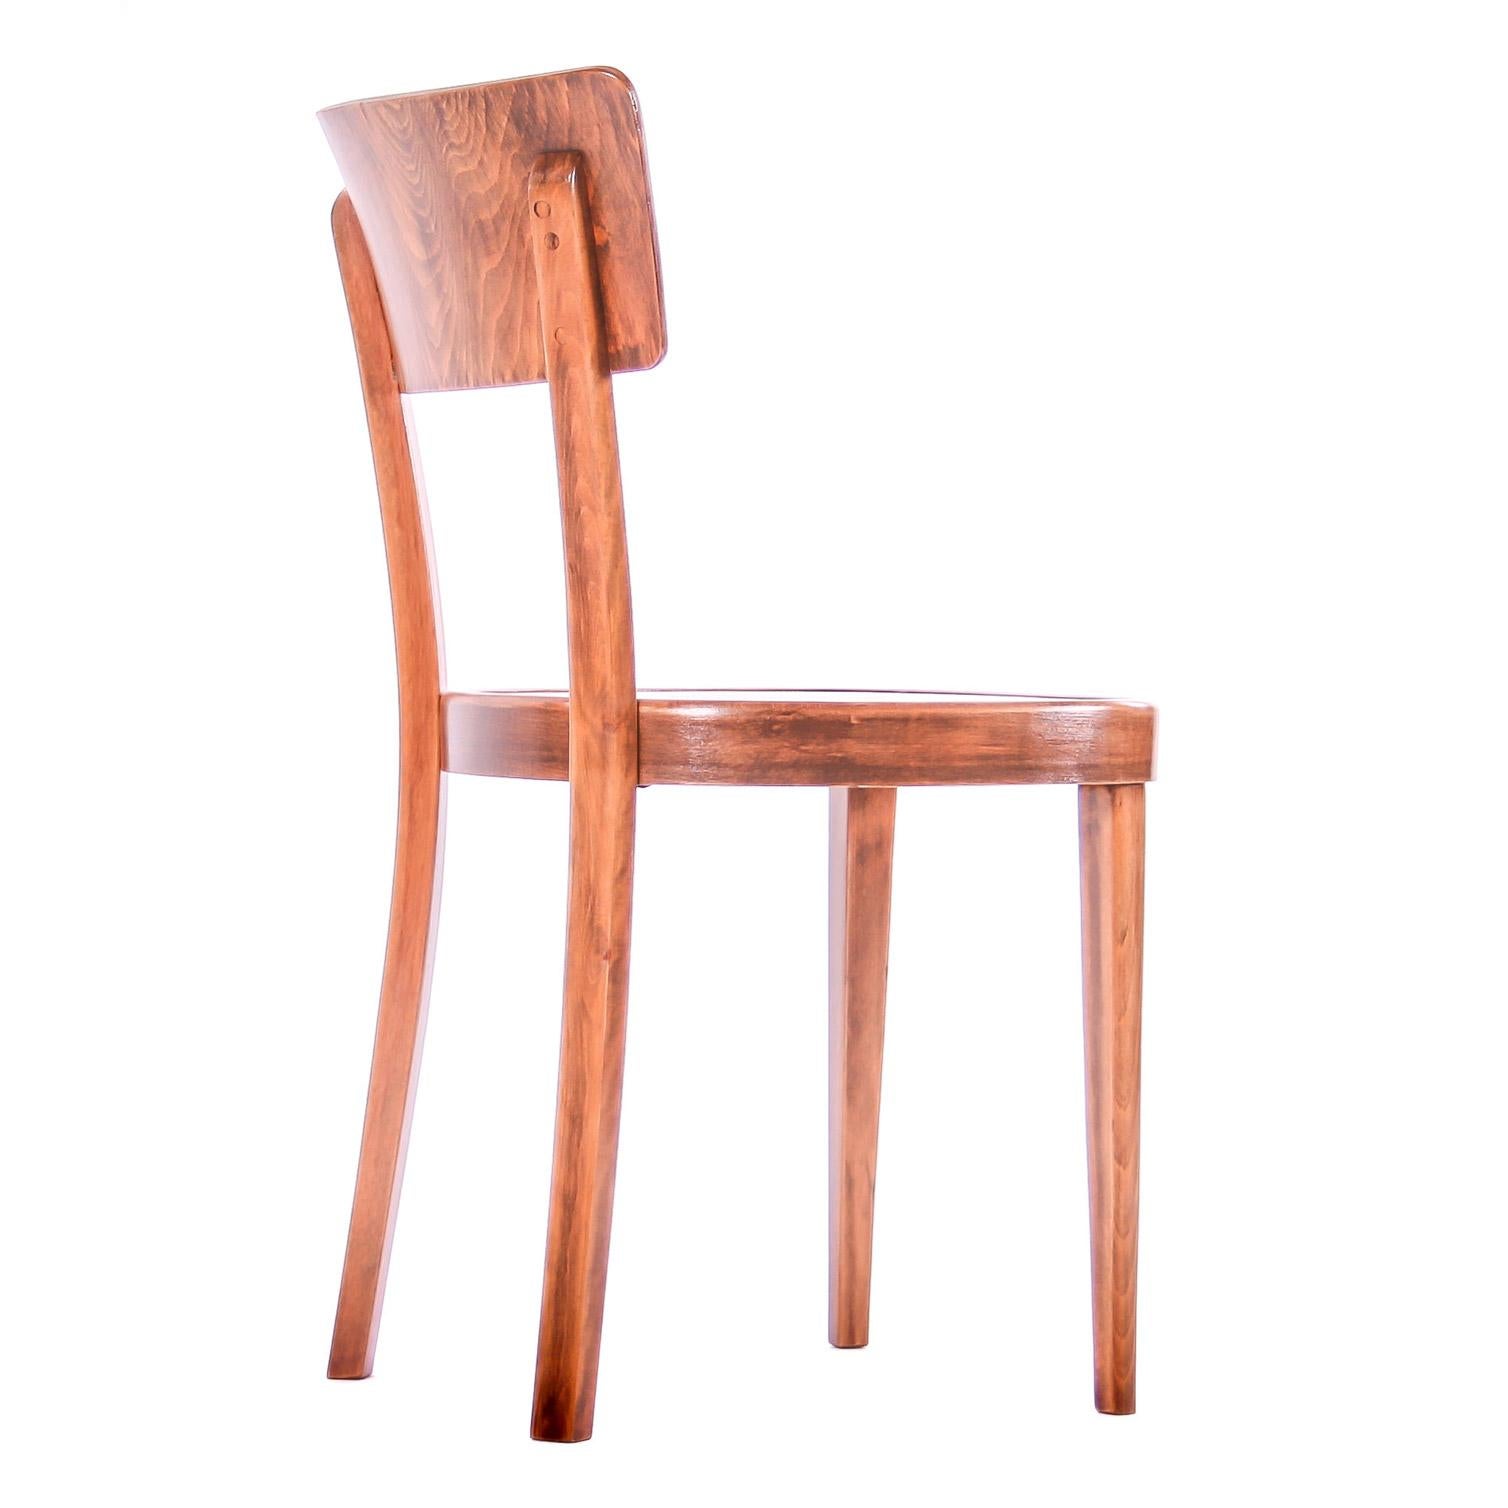 Czech Interwar Avantgard Design Dining Chairs by Jindrich Halabala 'UP Zavody' For Sale 1